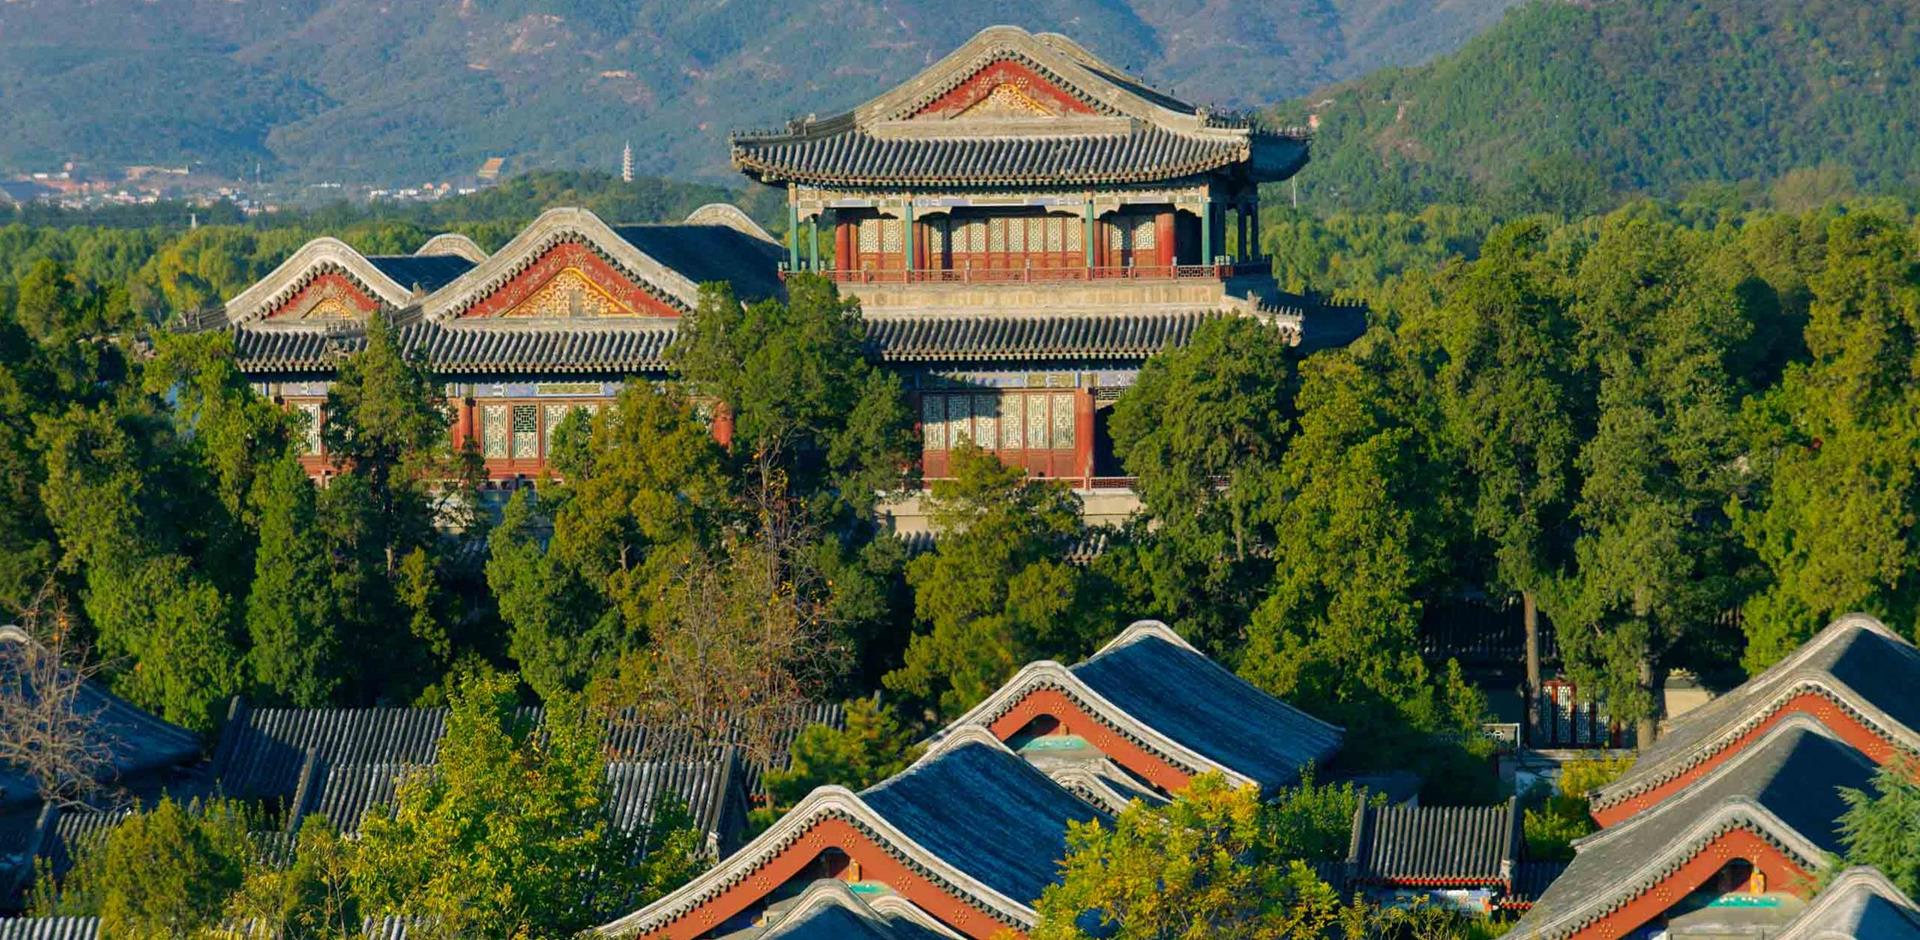 Aerial view, Aman Summer Palace, Beijing, China